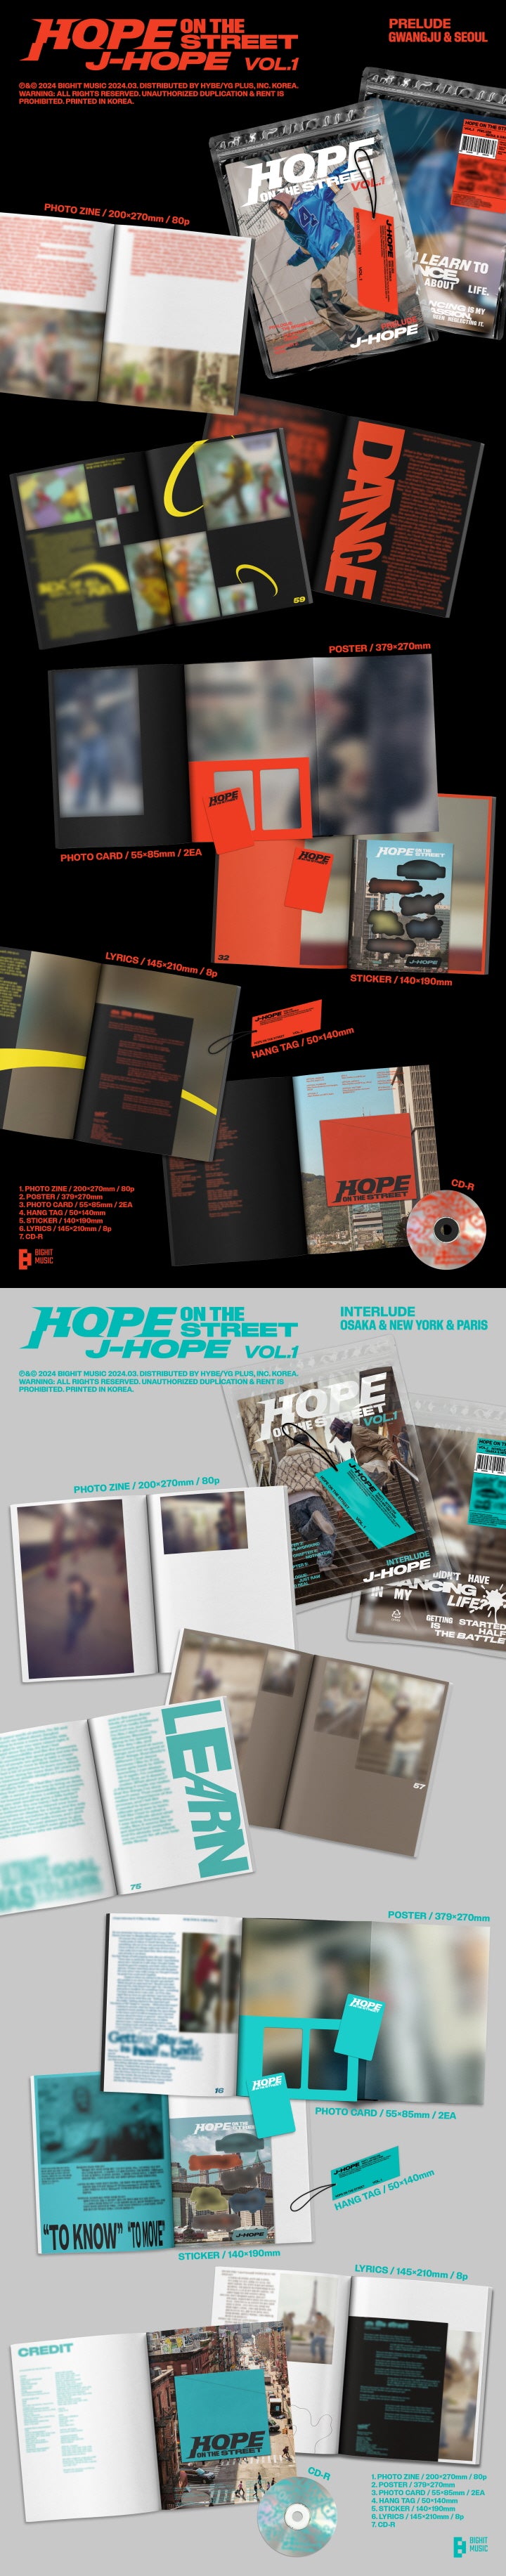 J-HOPE - [HOPE ON THE STREET] VOL.1 INTERLUDE OSAKA & NEW YORK & PARIS  Version